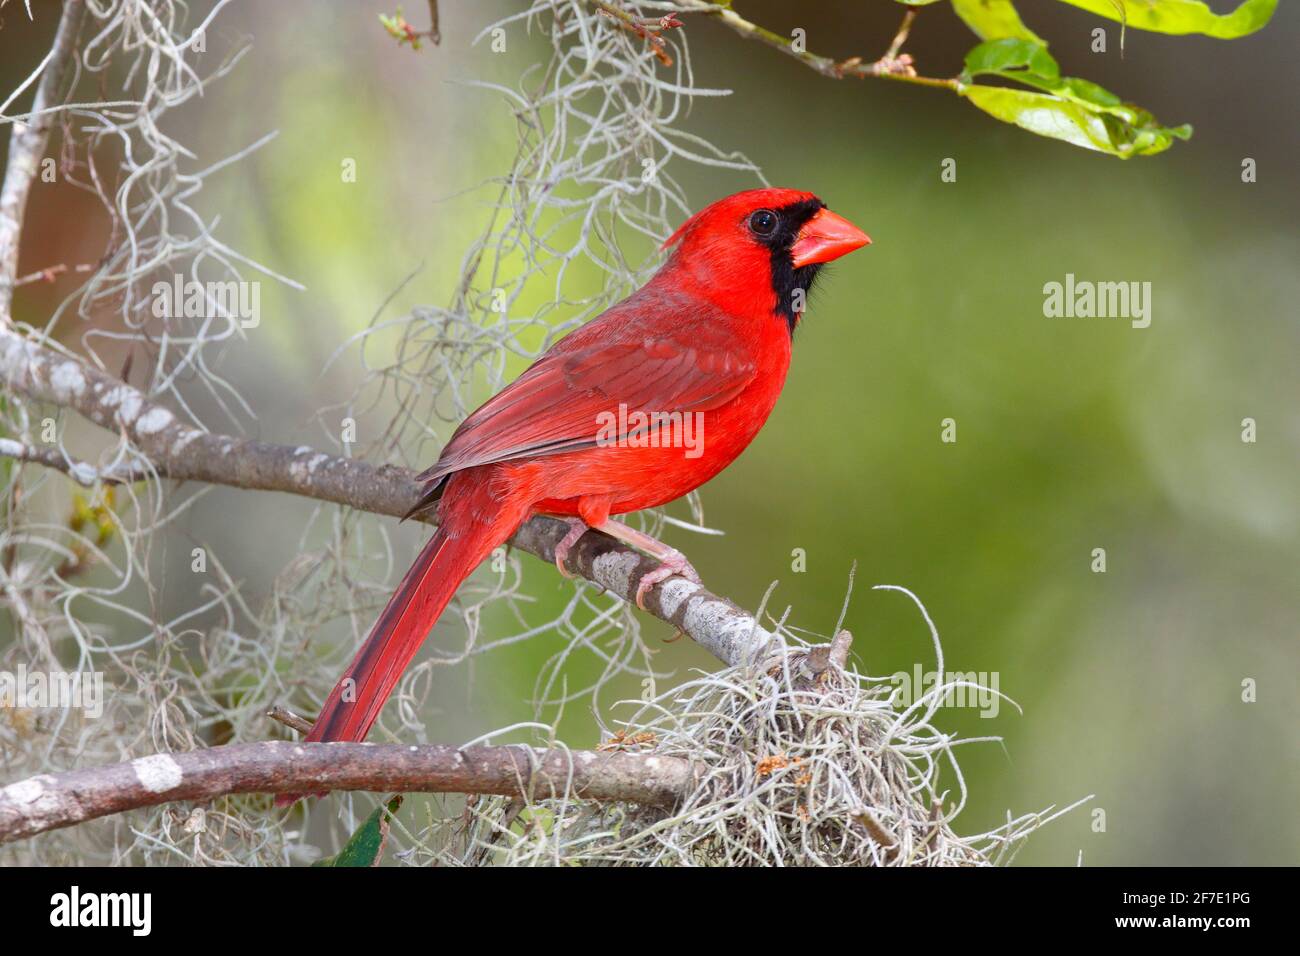 A northern cardinal, Cardinalis cardinalis, perched in a tree with Spanish moss. Stock Photo